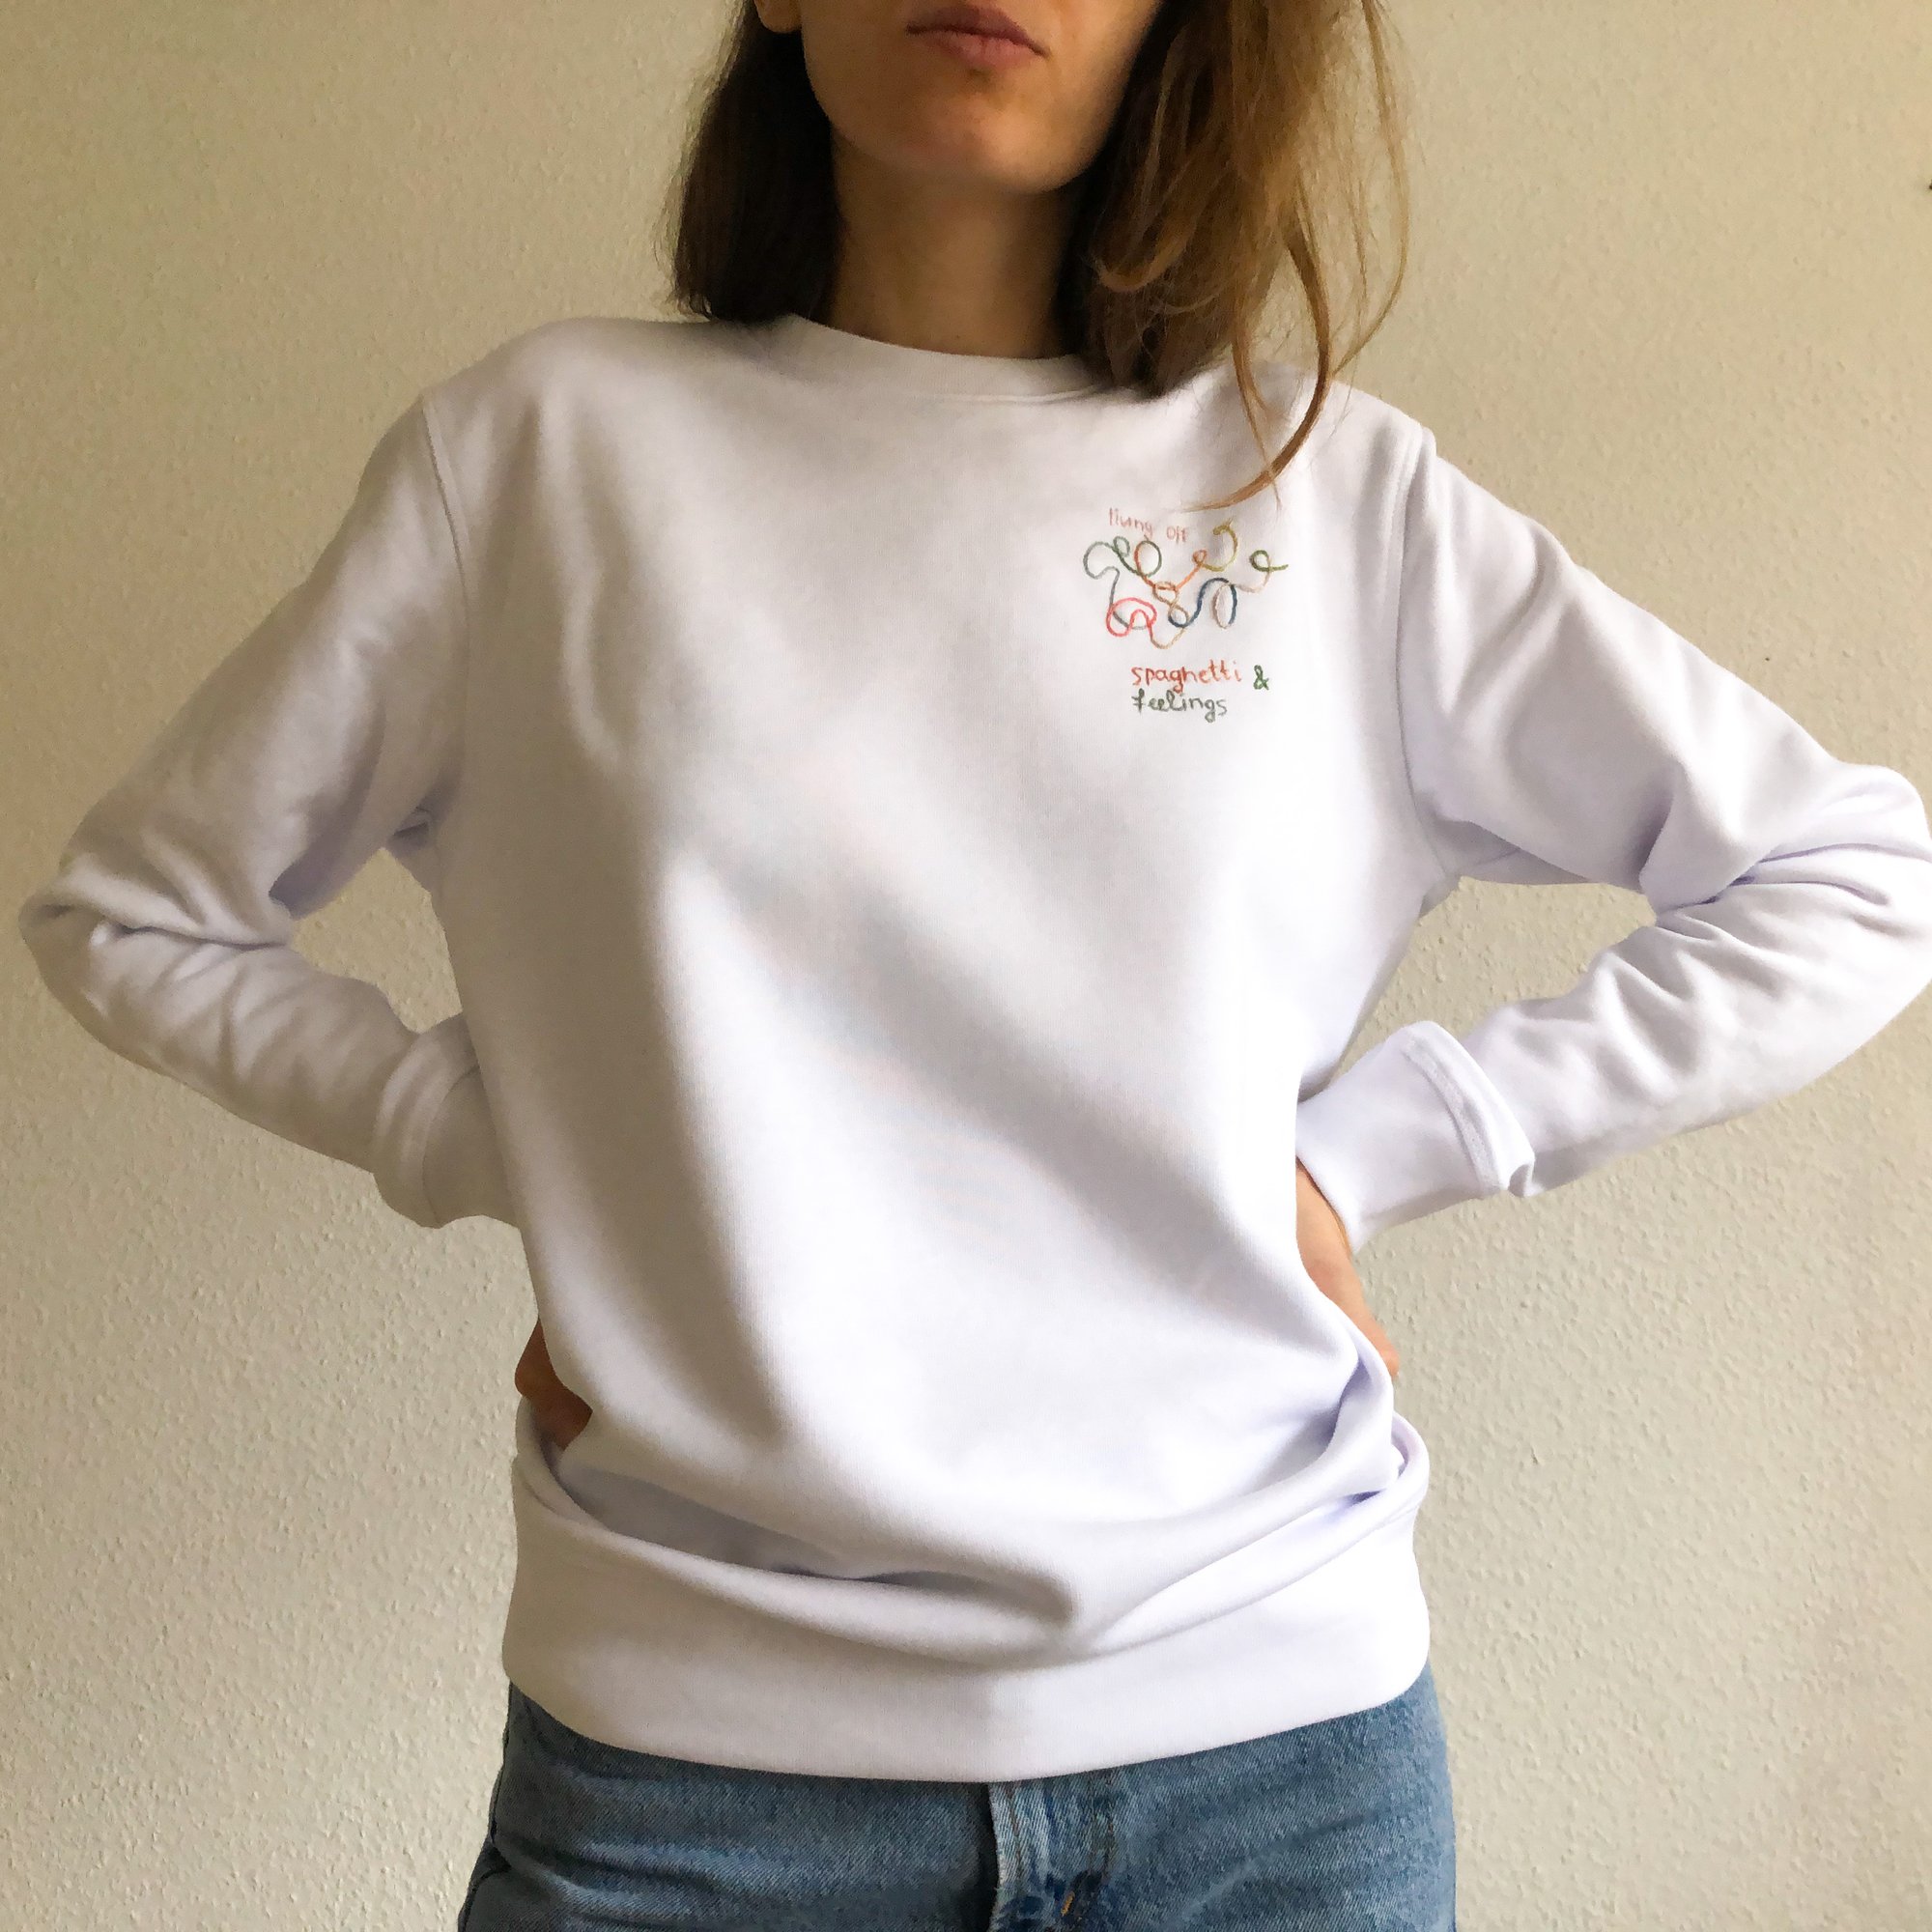 Spaghetti and feelings - hand embroidered organic cotton sweatshirt ...